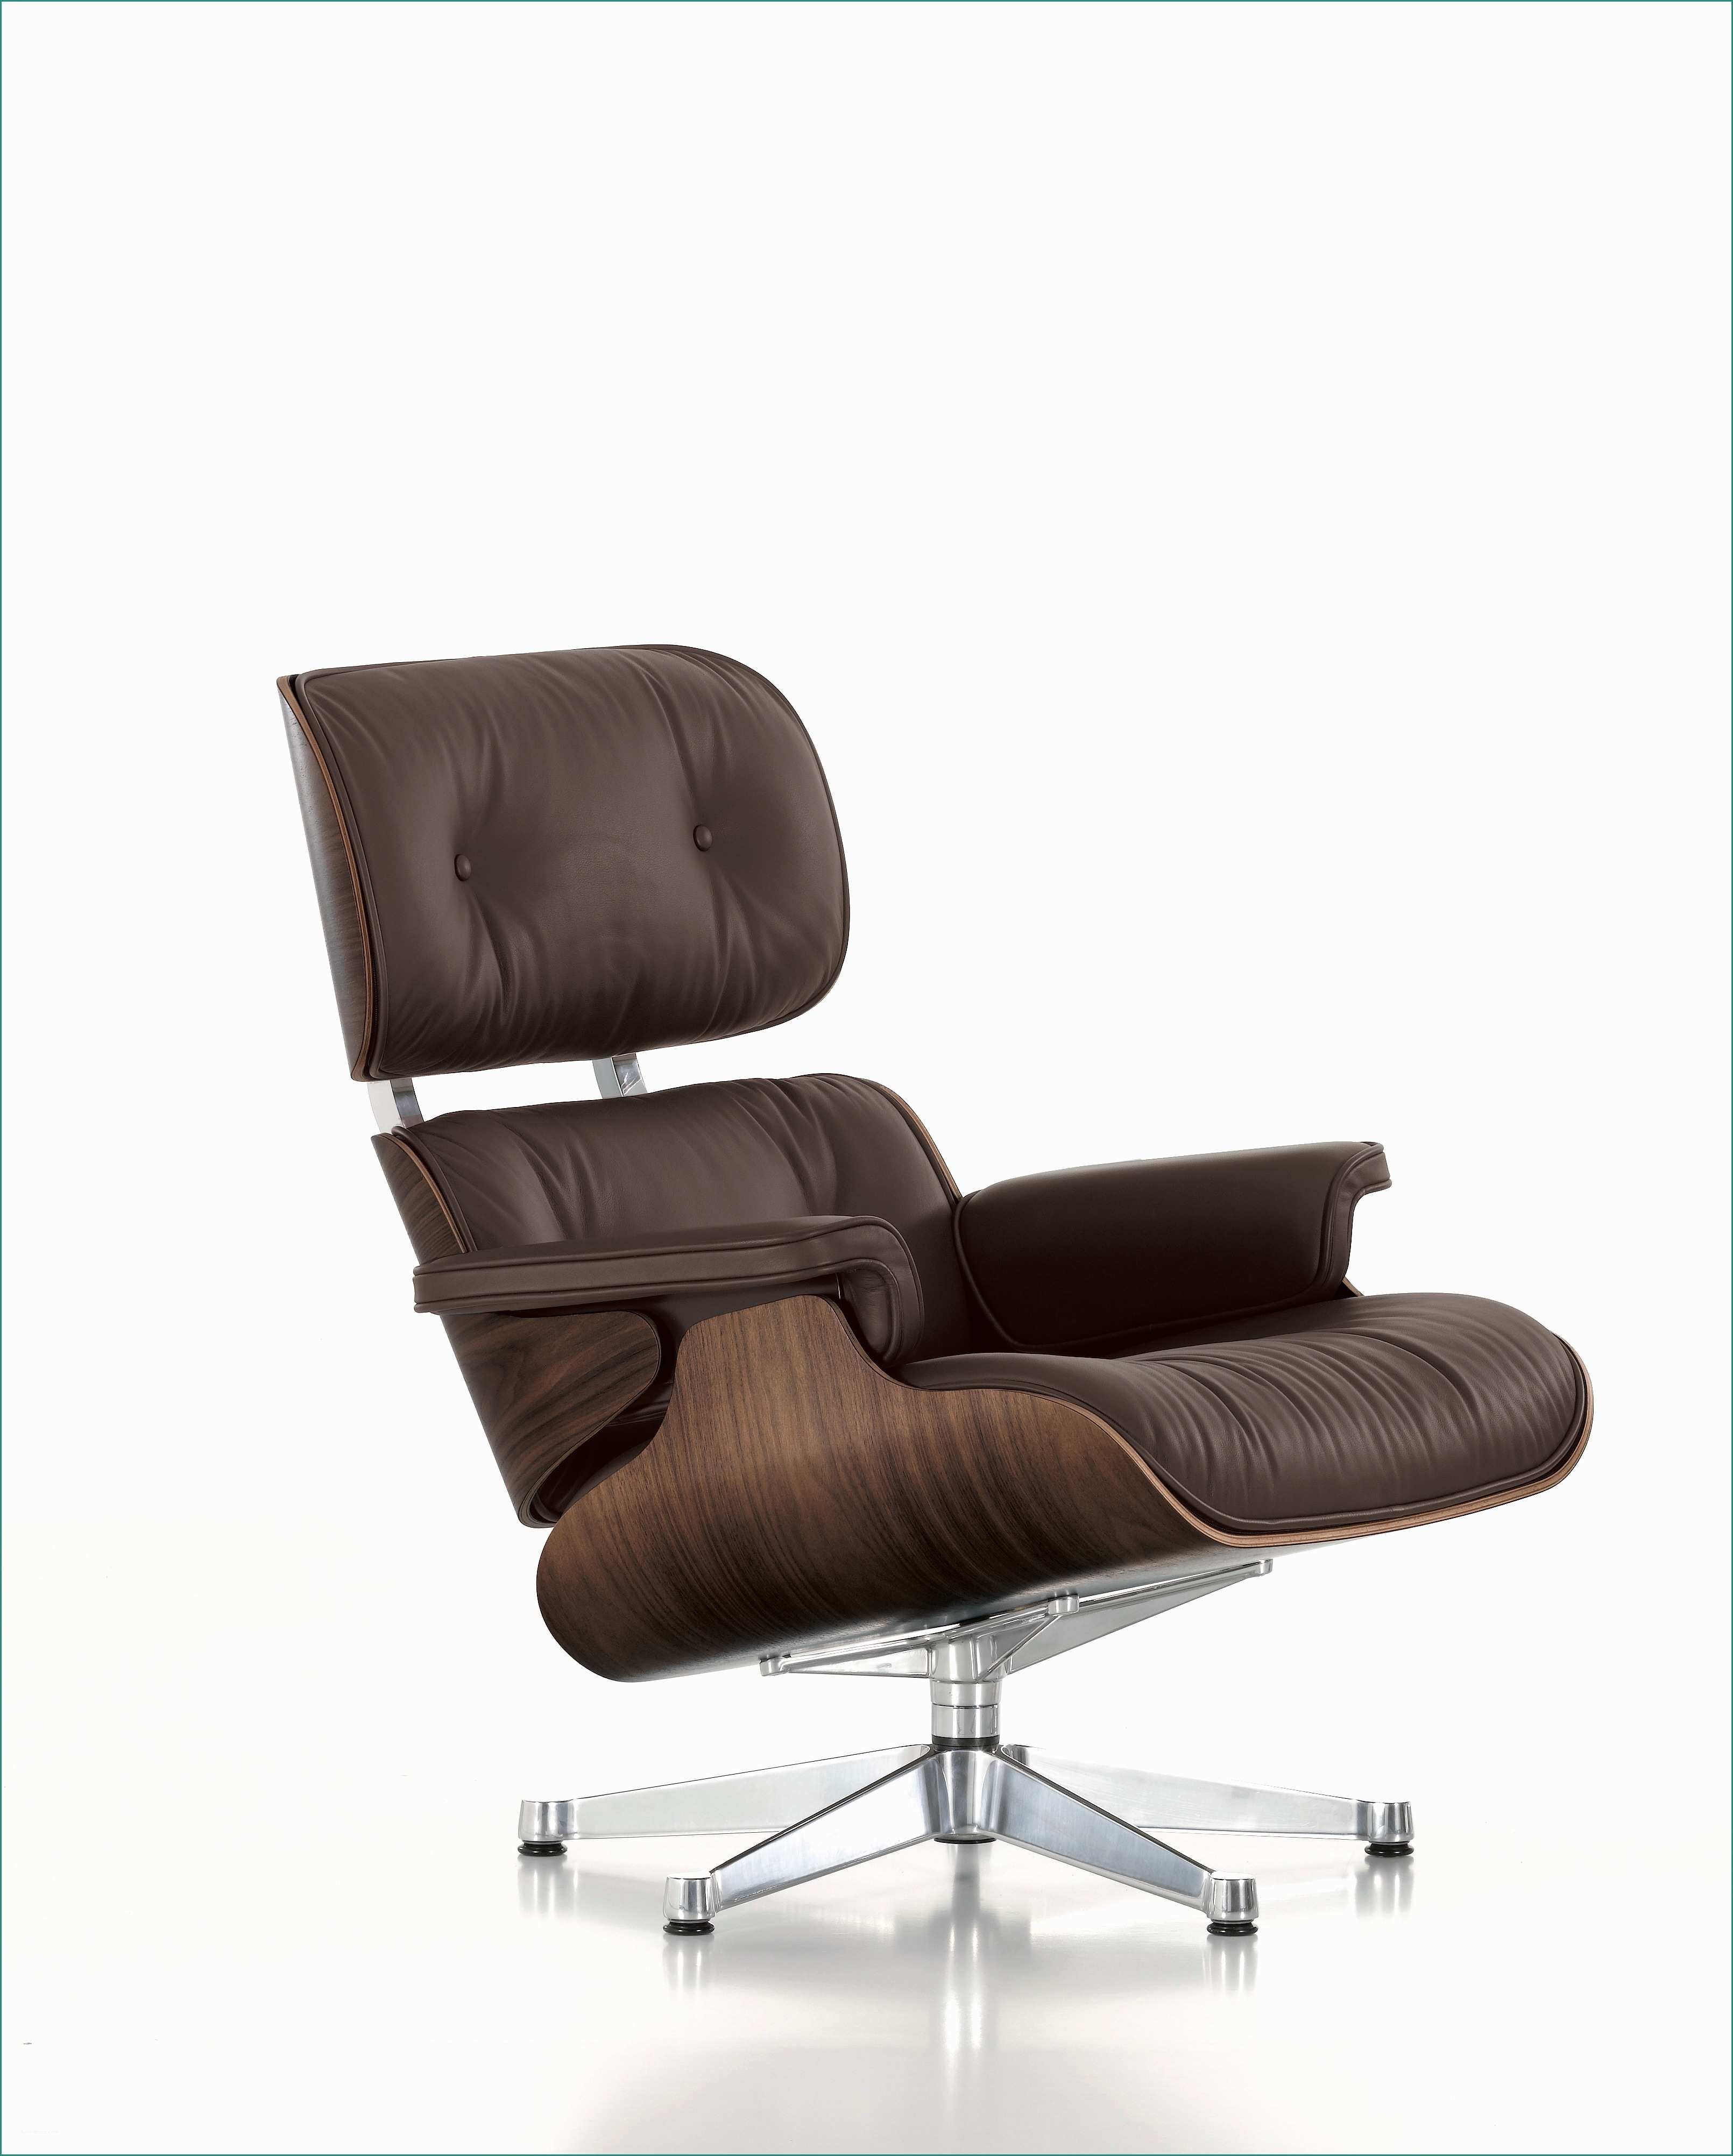 Vitra Lounge Chair kaufen bei Vitrapoint